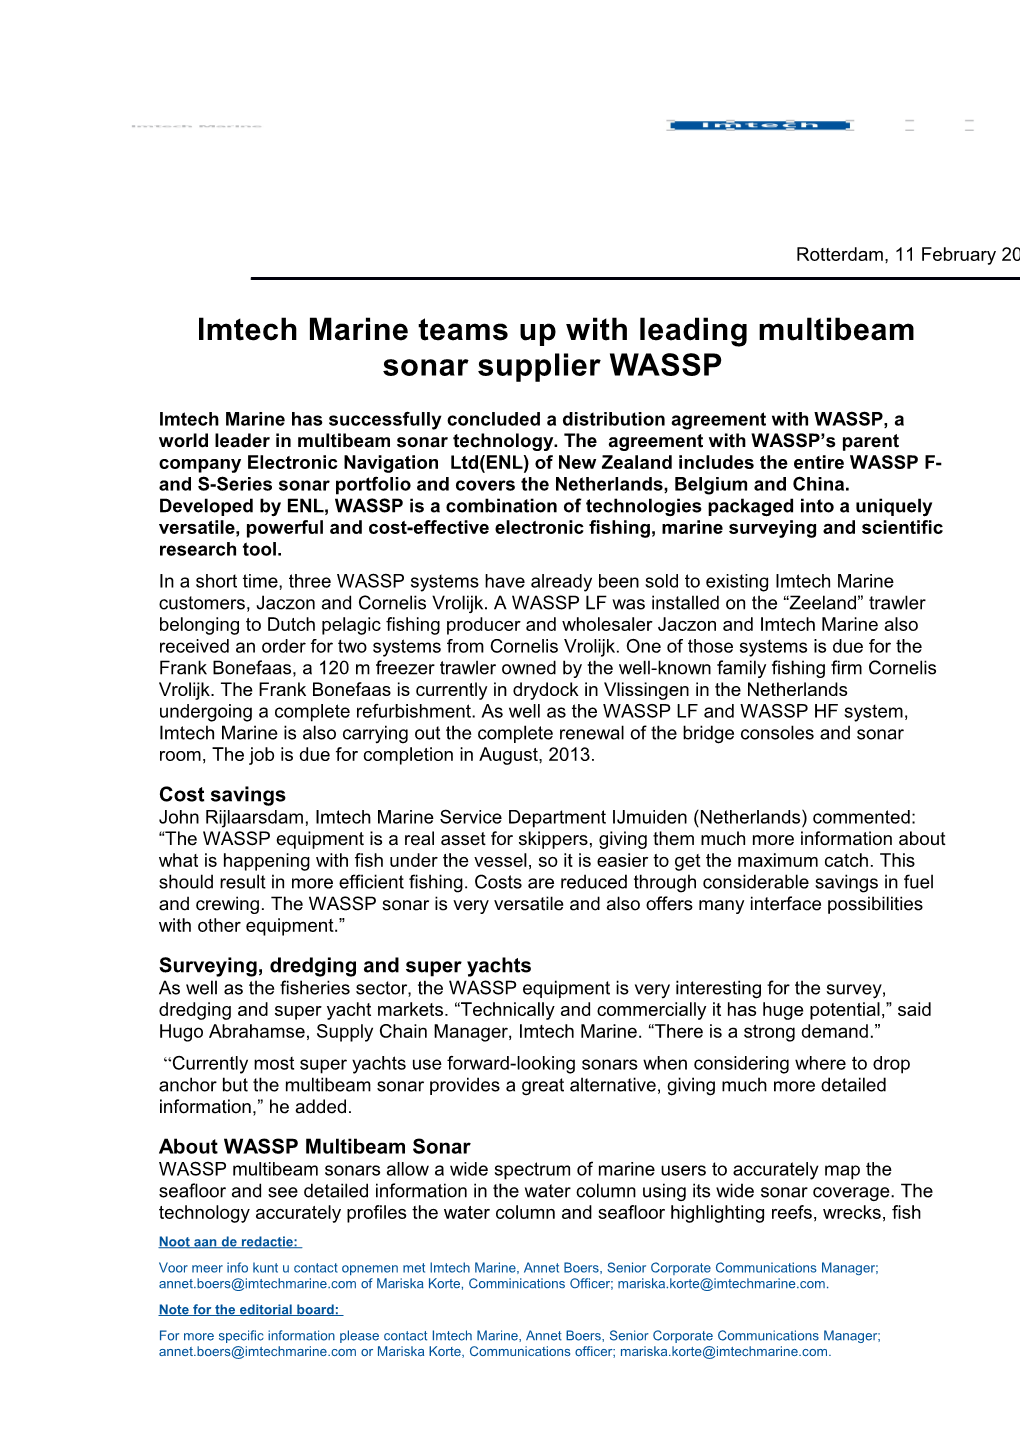 Imtech Marine Teams up with Leading Multibeam Sonar Supplier WASSP